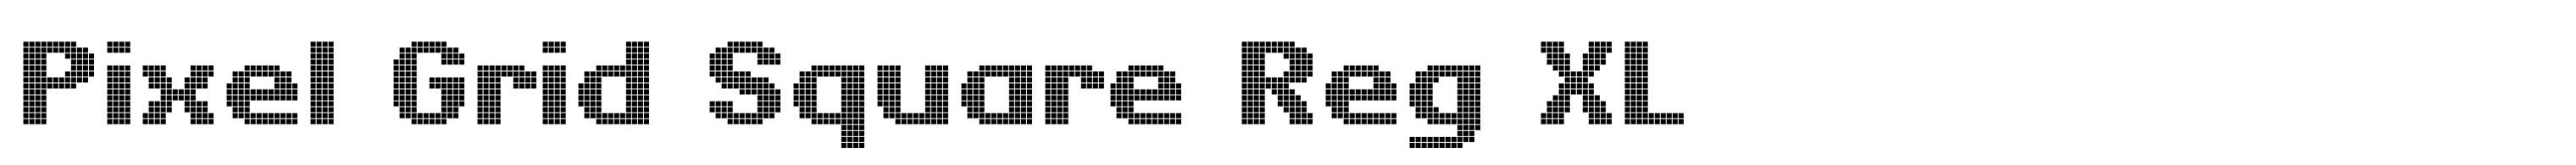 Pixel Grid Square Reg XL